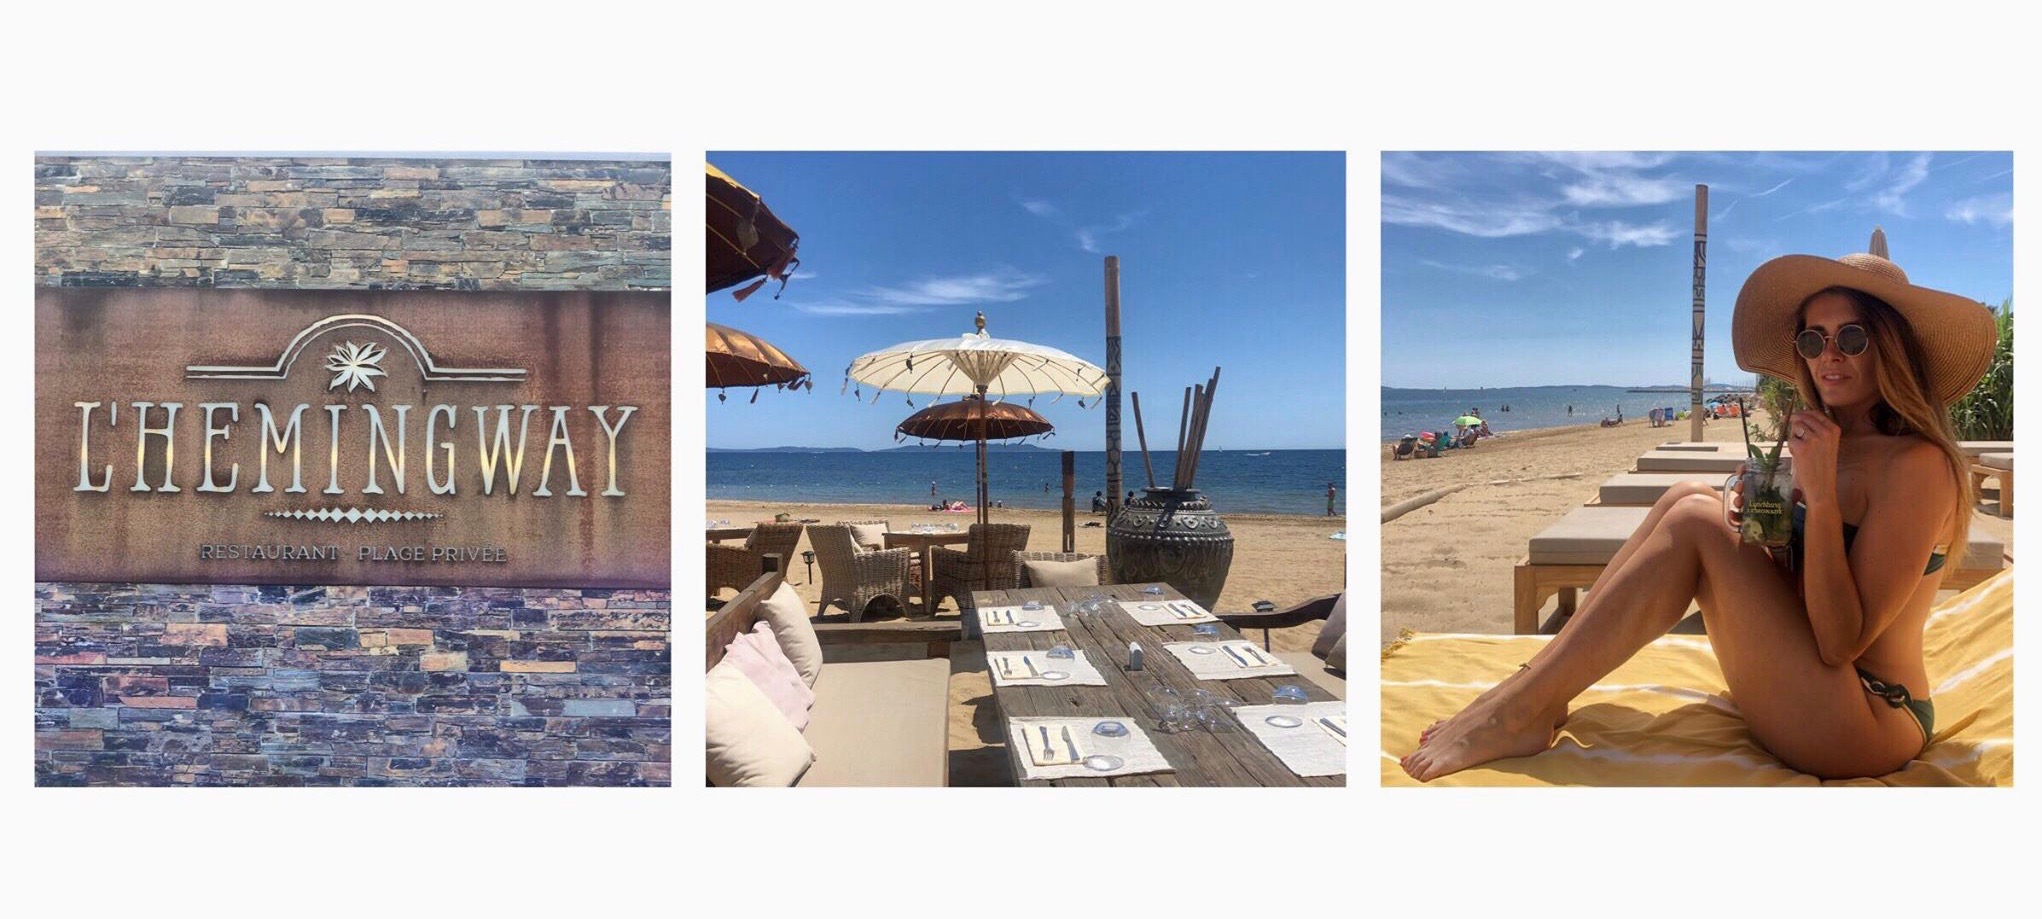 restaurant l'Hemingway plage privée var